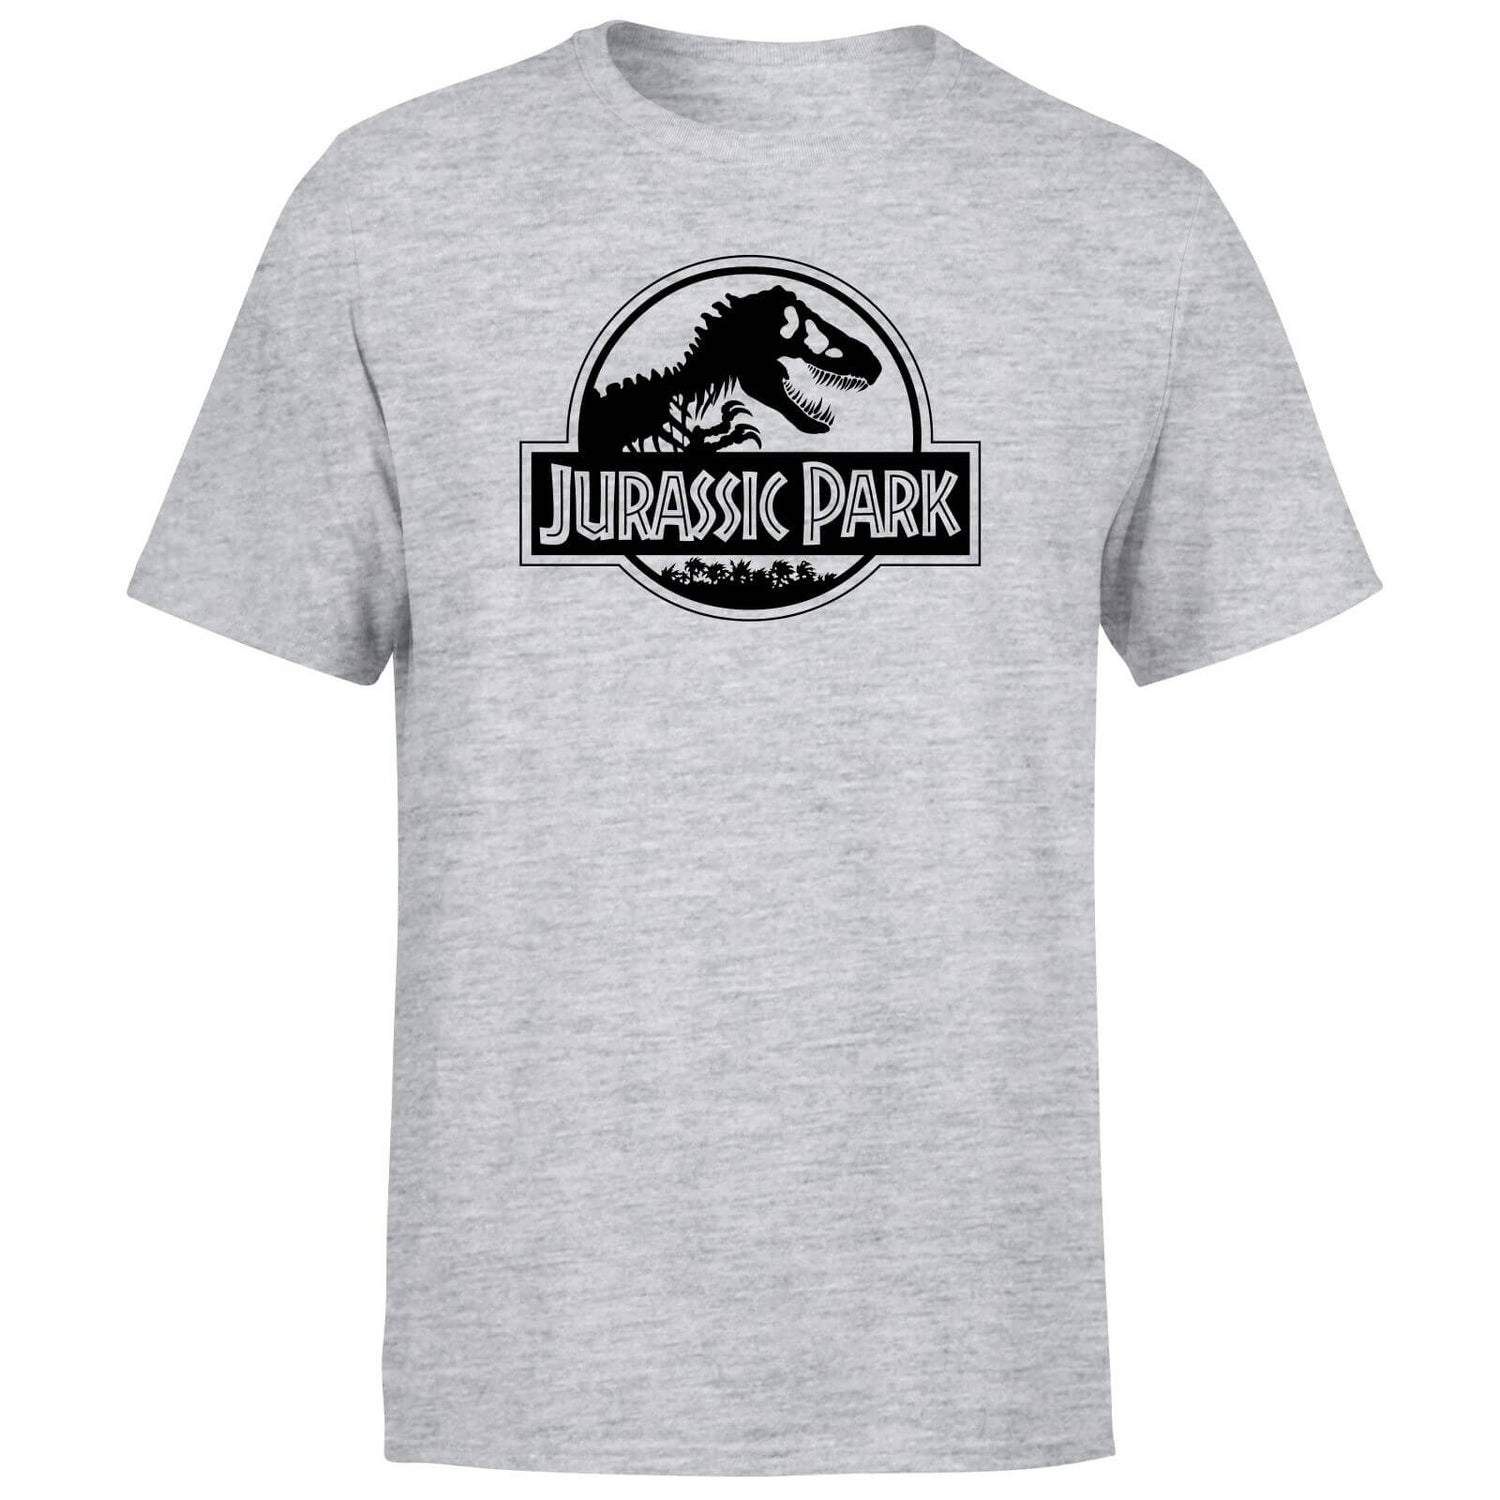 Jurassic Park Logo Men's T-Shirt - Grey